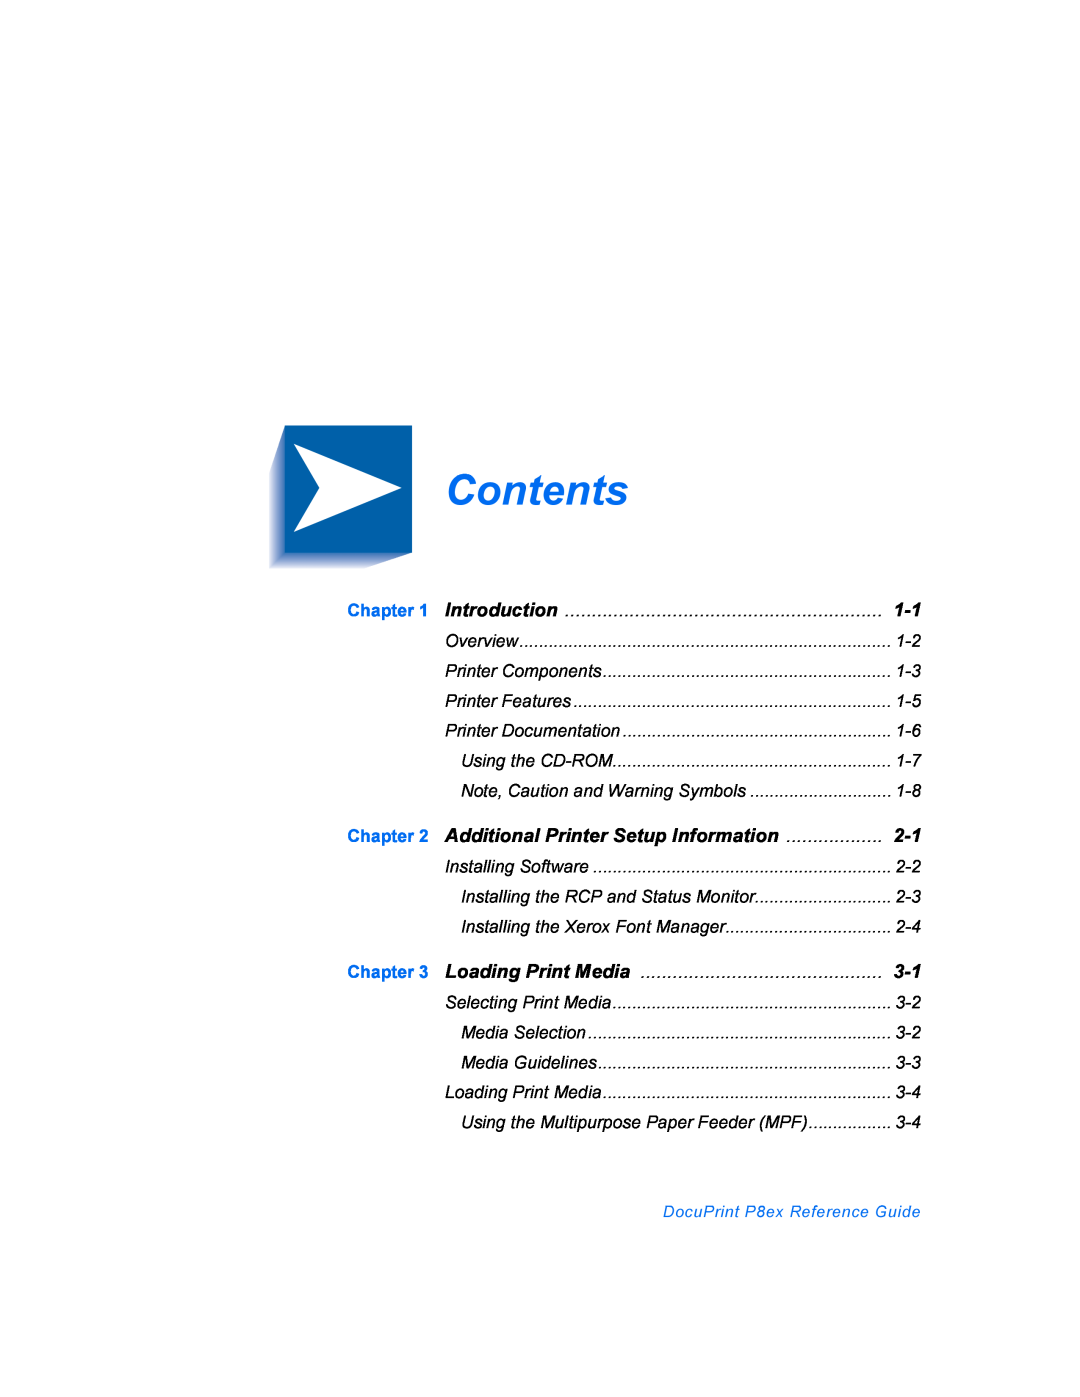 Xerox DocuPrint P8ex manual Contents, Introduction, Additional Printer Setup Information, Loading Print Media 